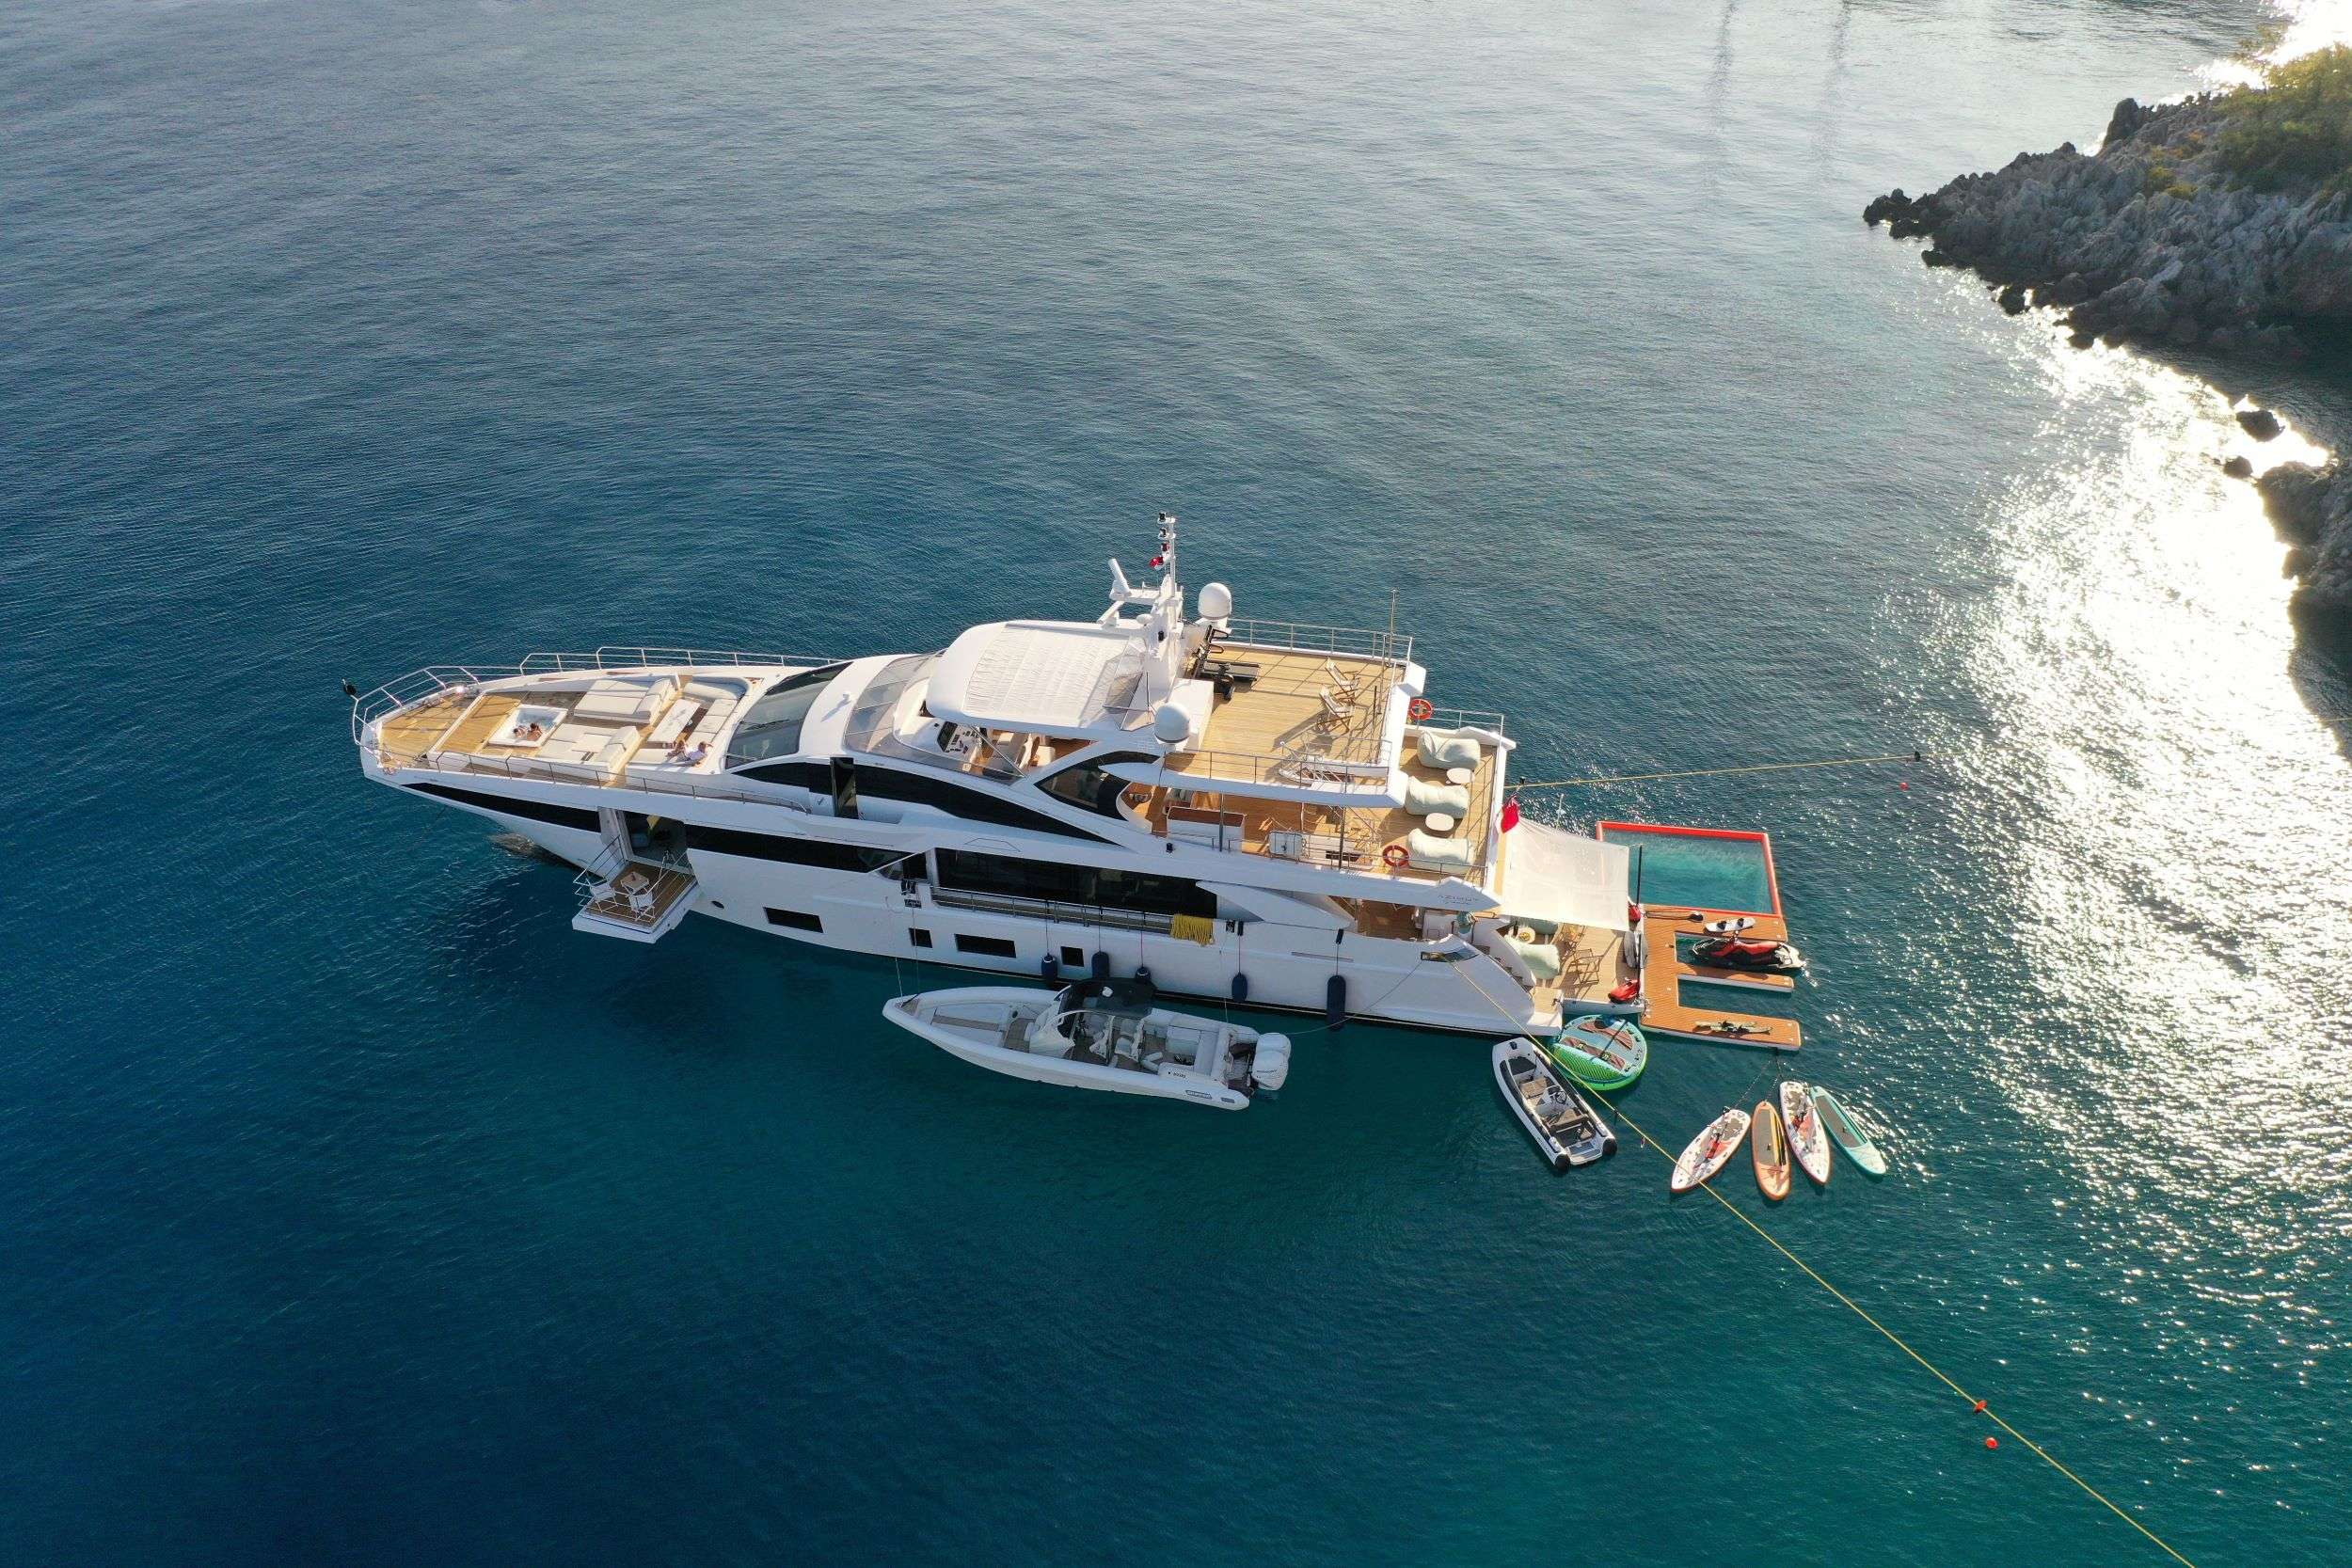 LOVE T - Superyacht charter Sicily & Boat hire in Summer: Greece | Winter: W. Med -Naples/Sicily 1